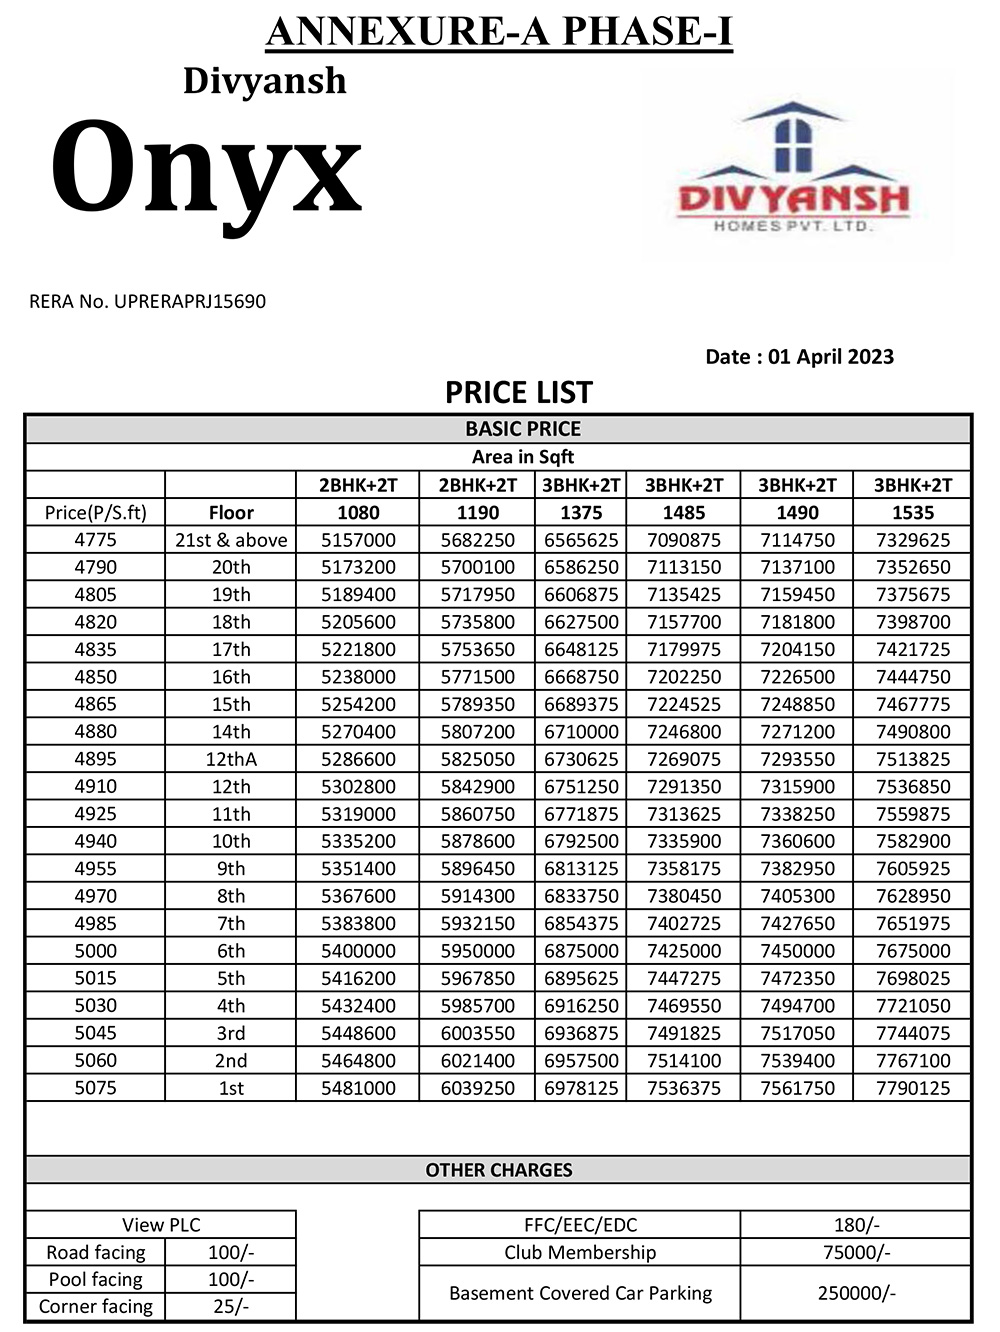 Divyansh Onyx Price List